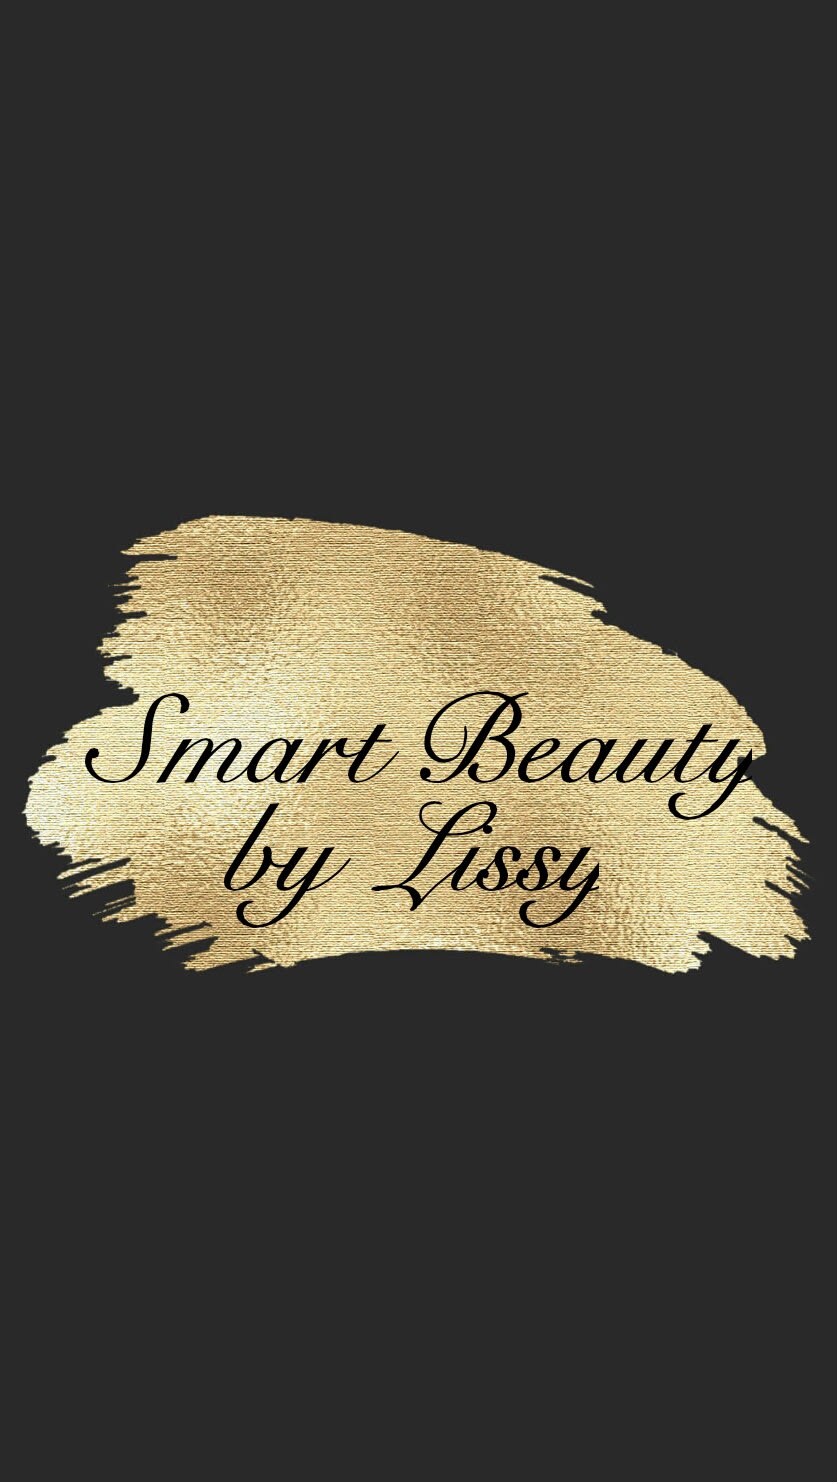 Tu Estética Smart Beauty by Lissy